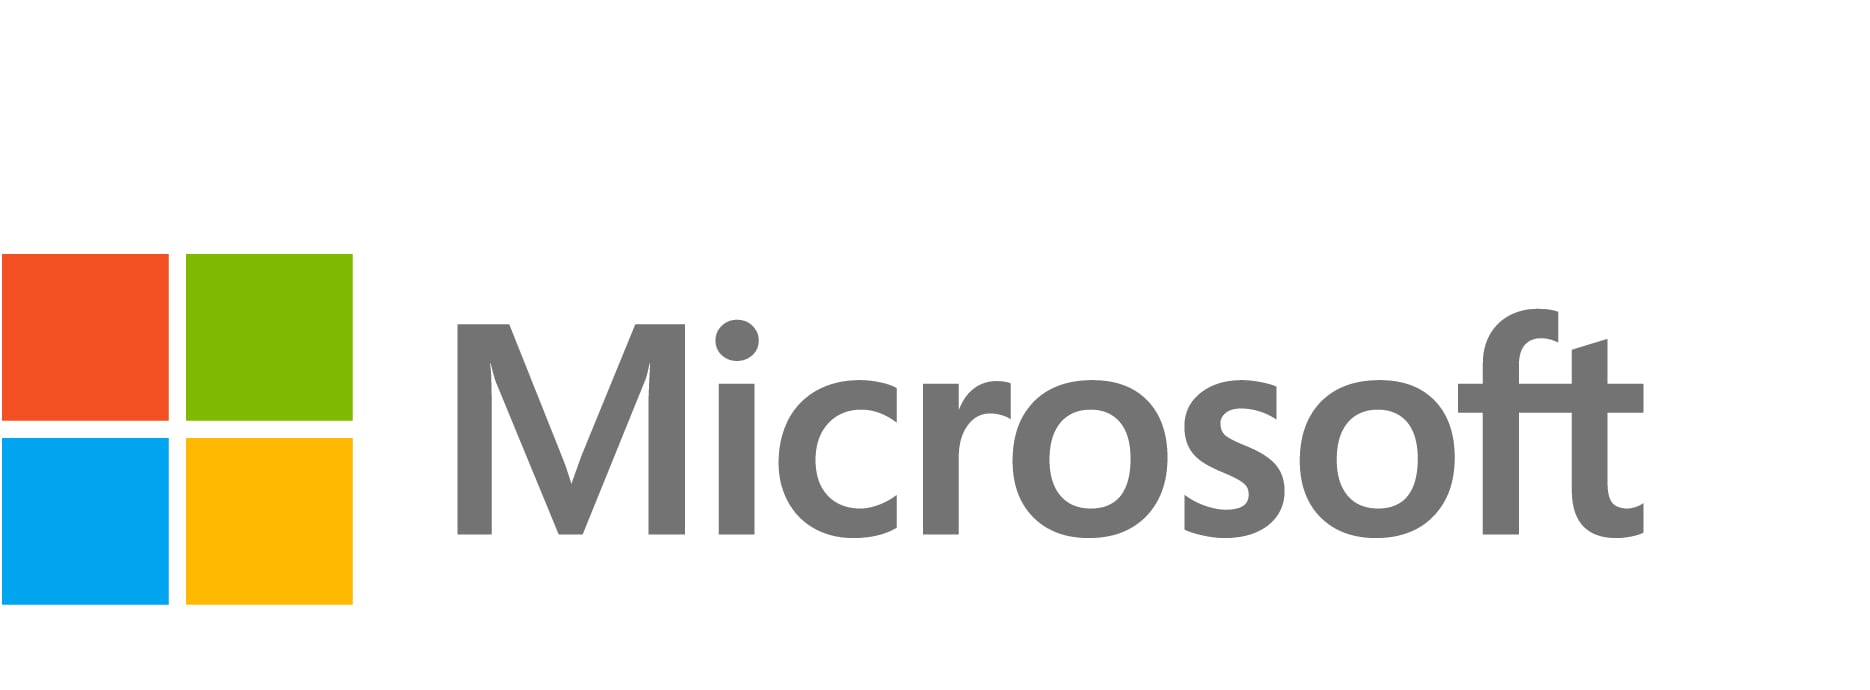 Microsoft Visual Studio Professional 2022 - license - 1 user